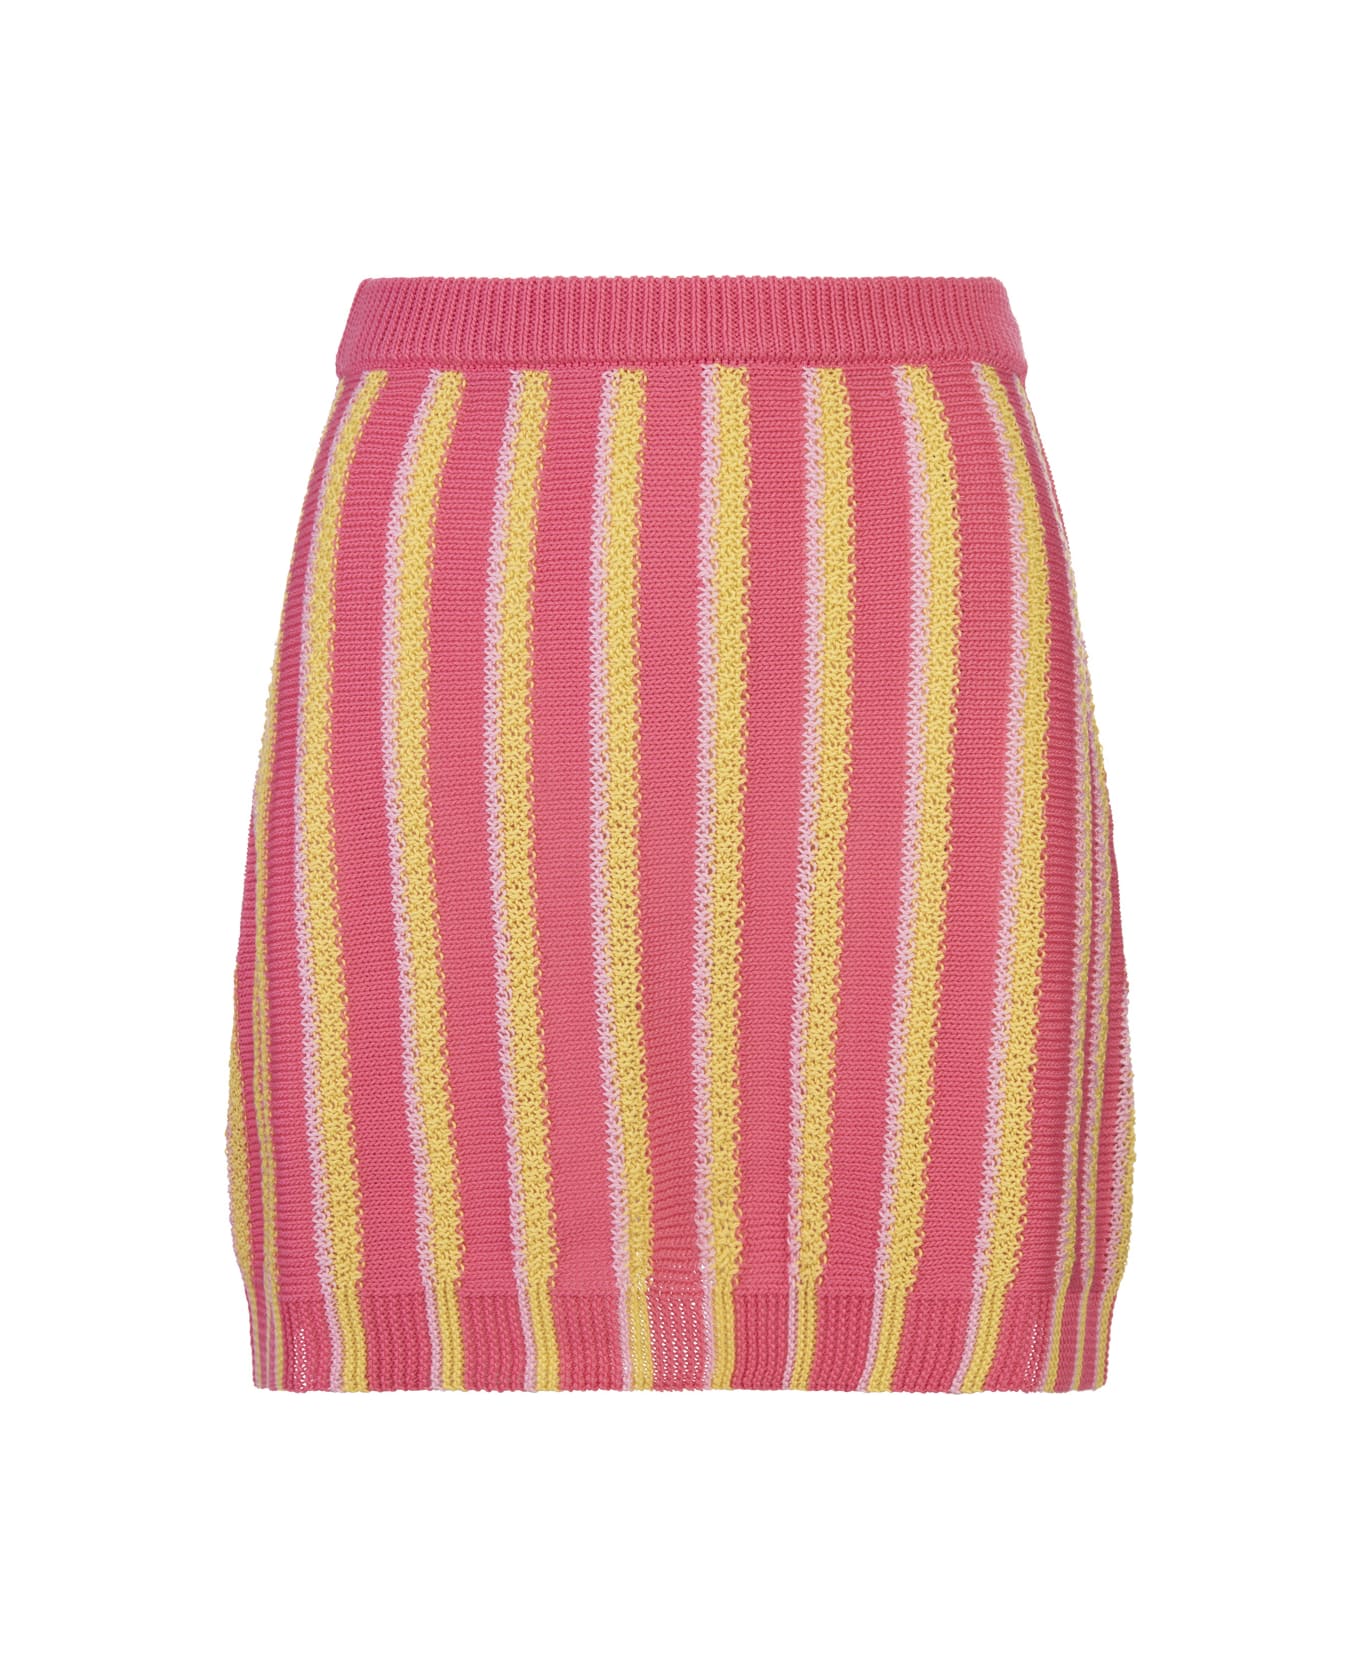 Marni Pink, Yellow And White Striped Knitted Mini Skirt - Pink スカート